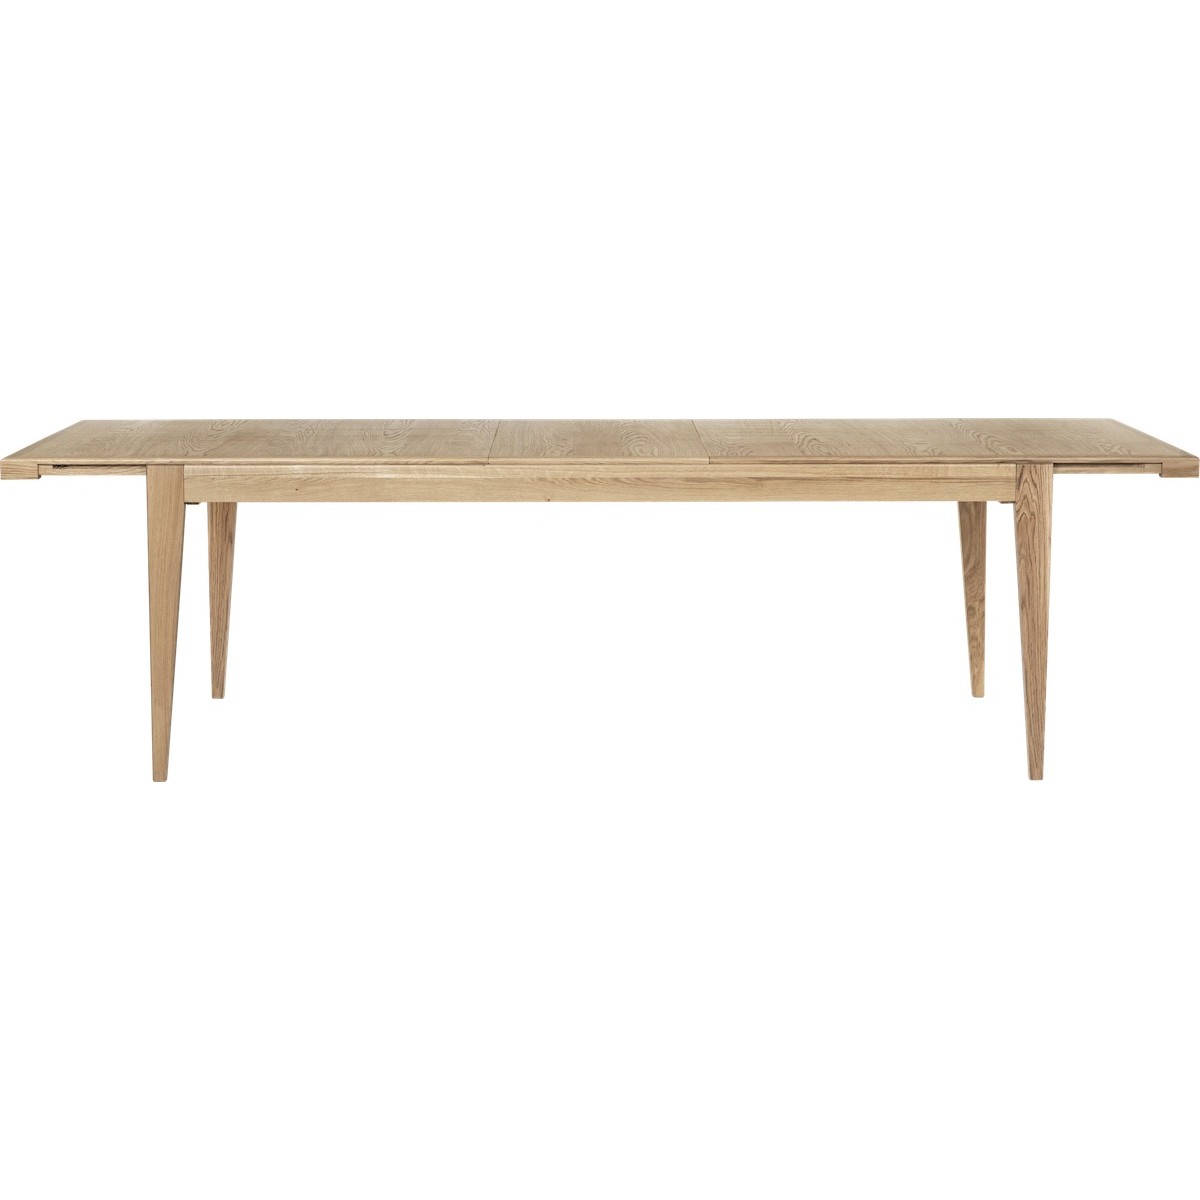 Oak matt lacquered – S-Table extendable